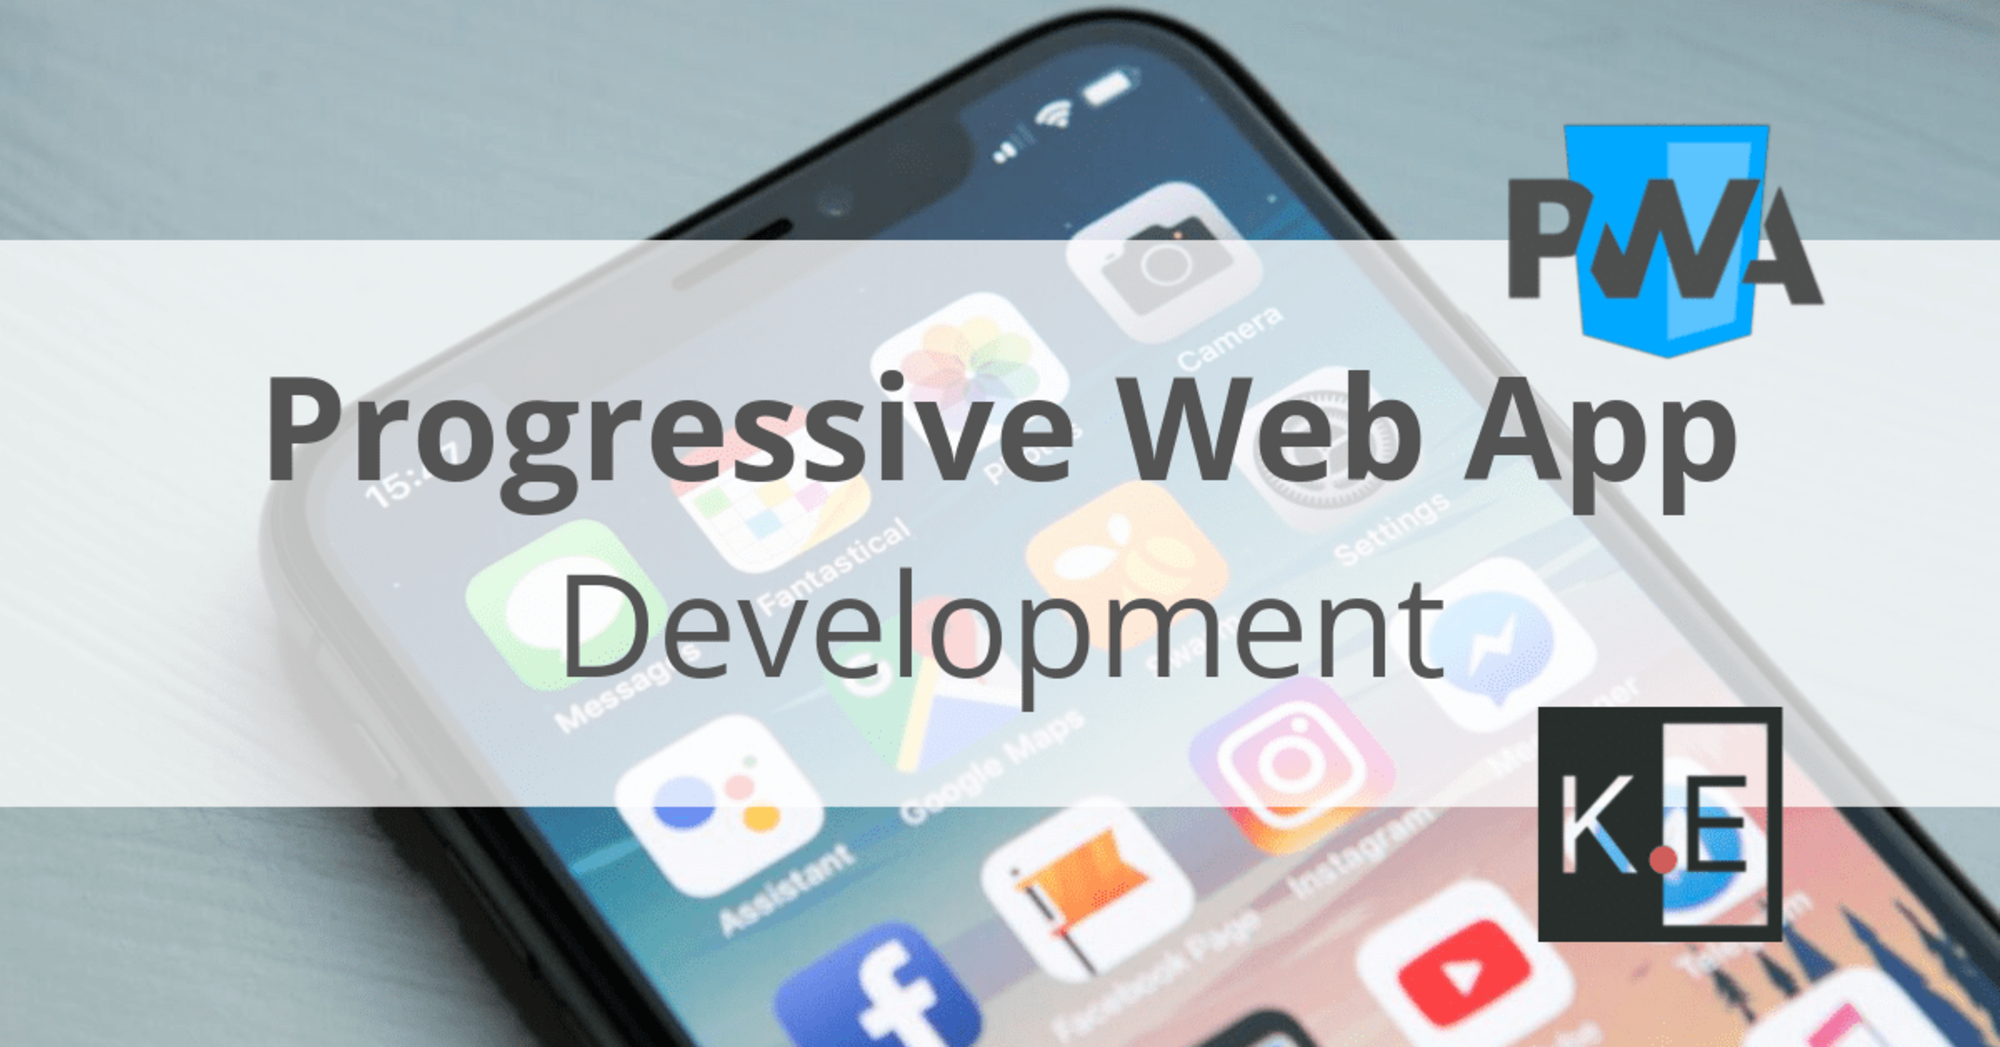 What are Progressive Web Apps?, Articles